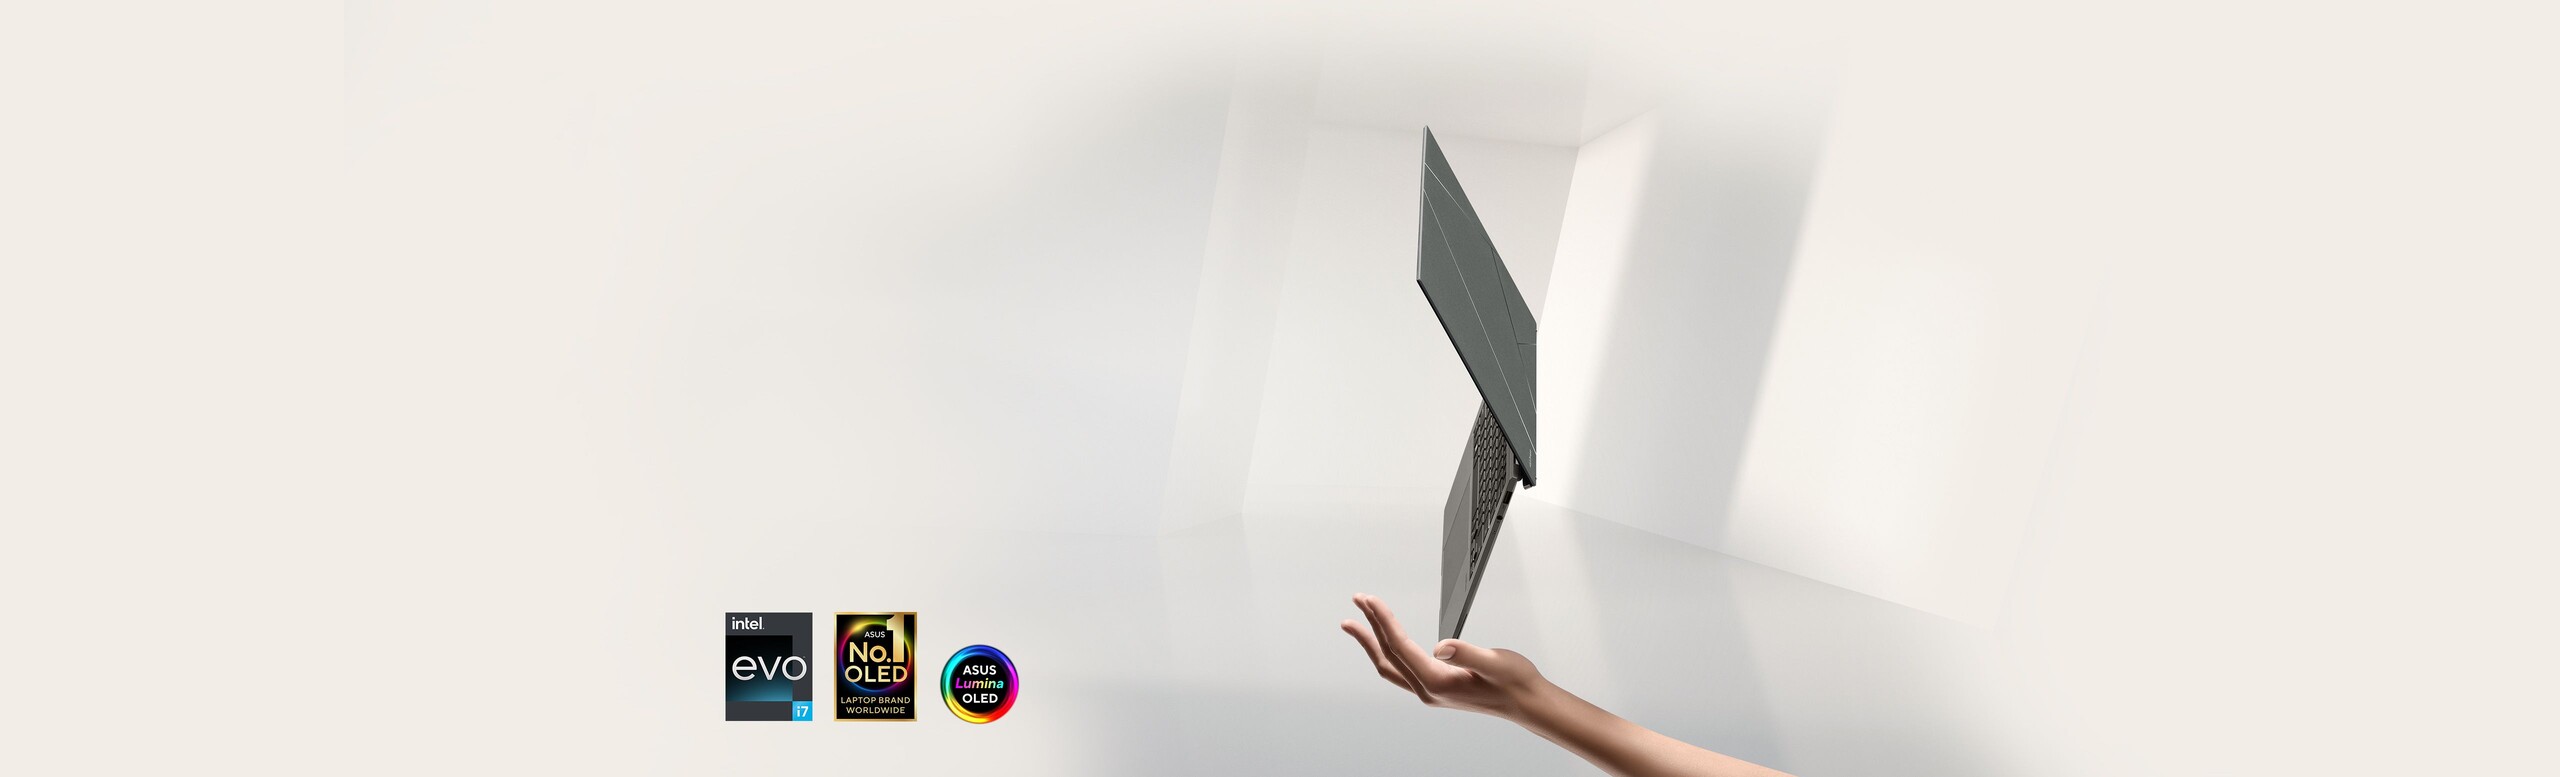 Zenbook S 13 OLED laptops World's Slimmest OLED Ultraportable Laptop Buy Now